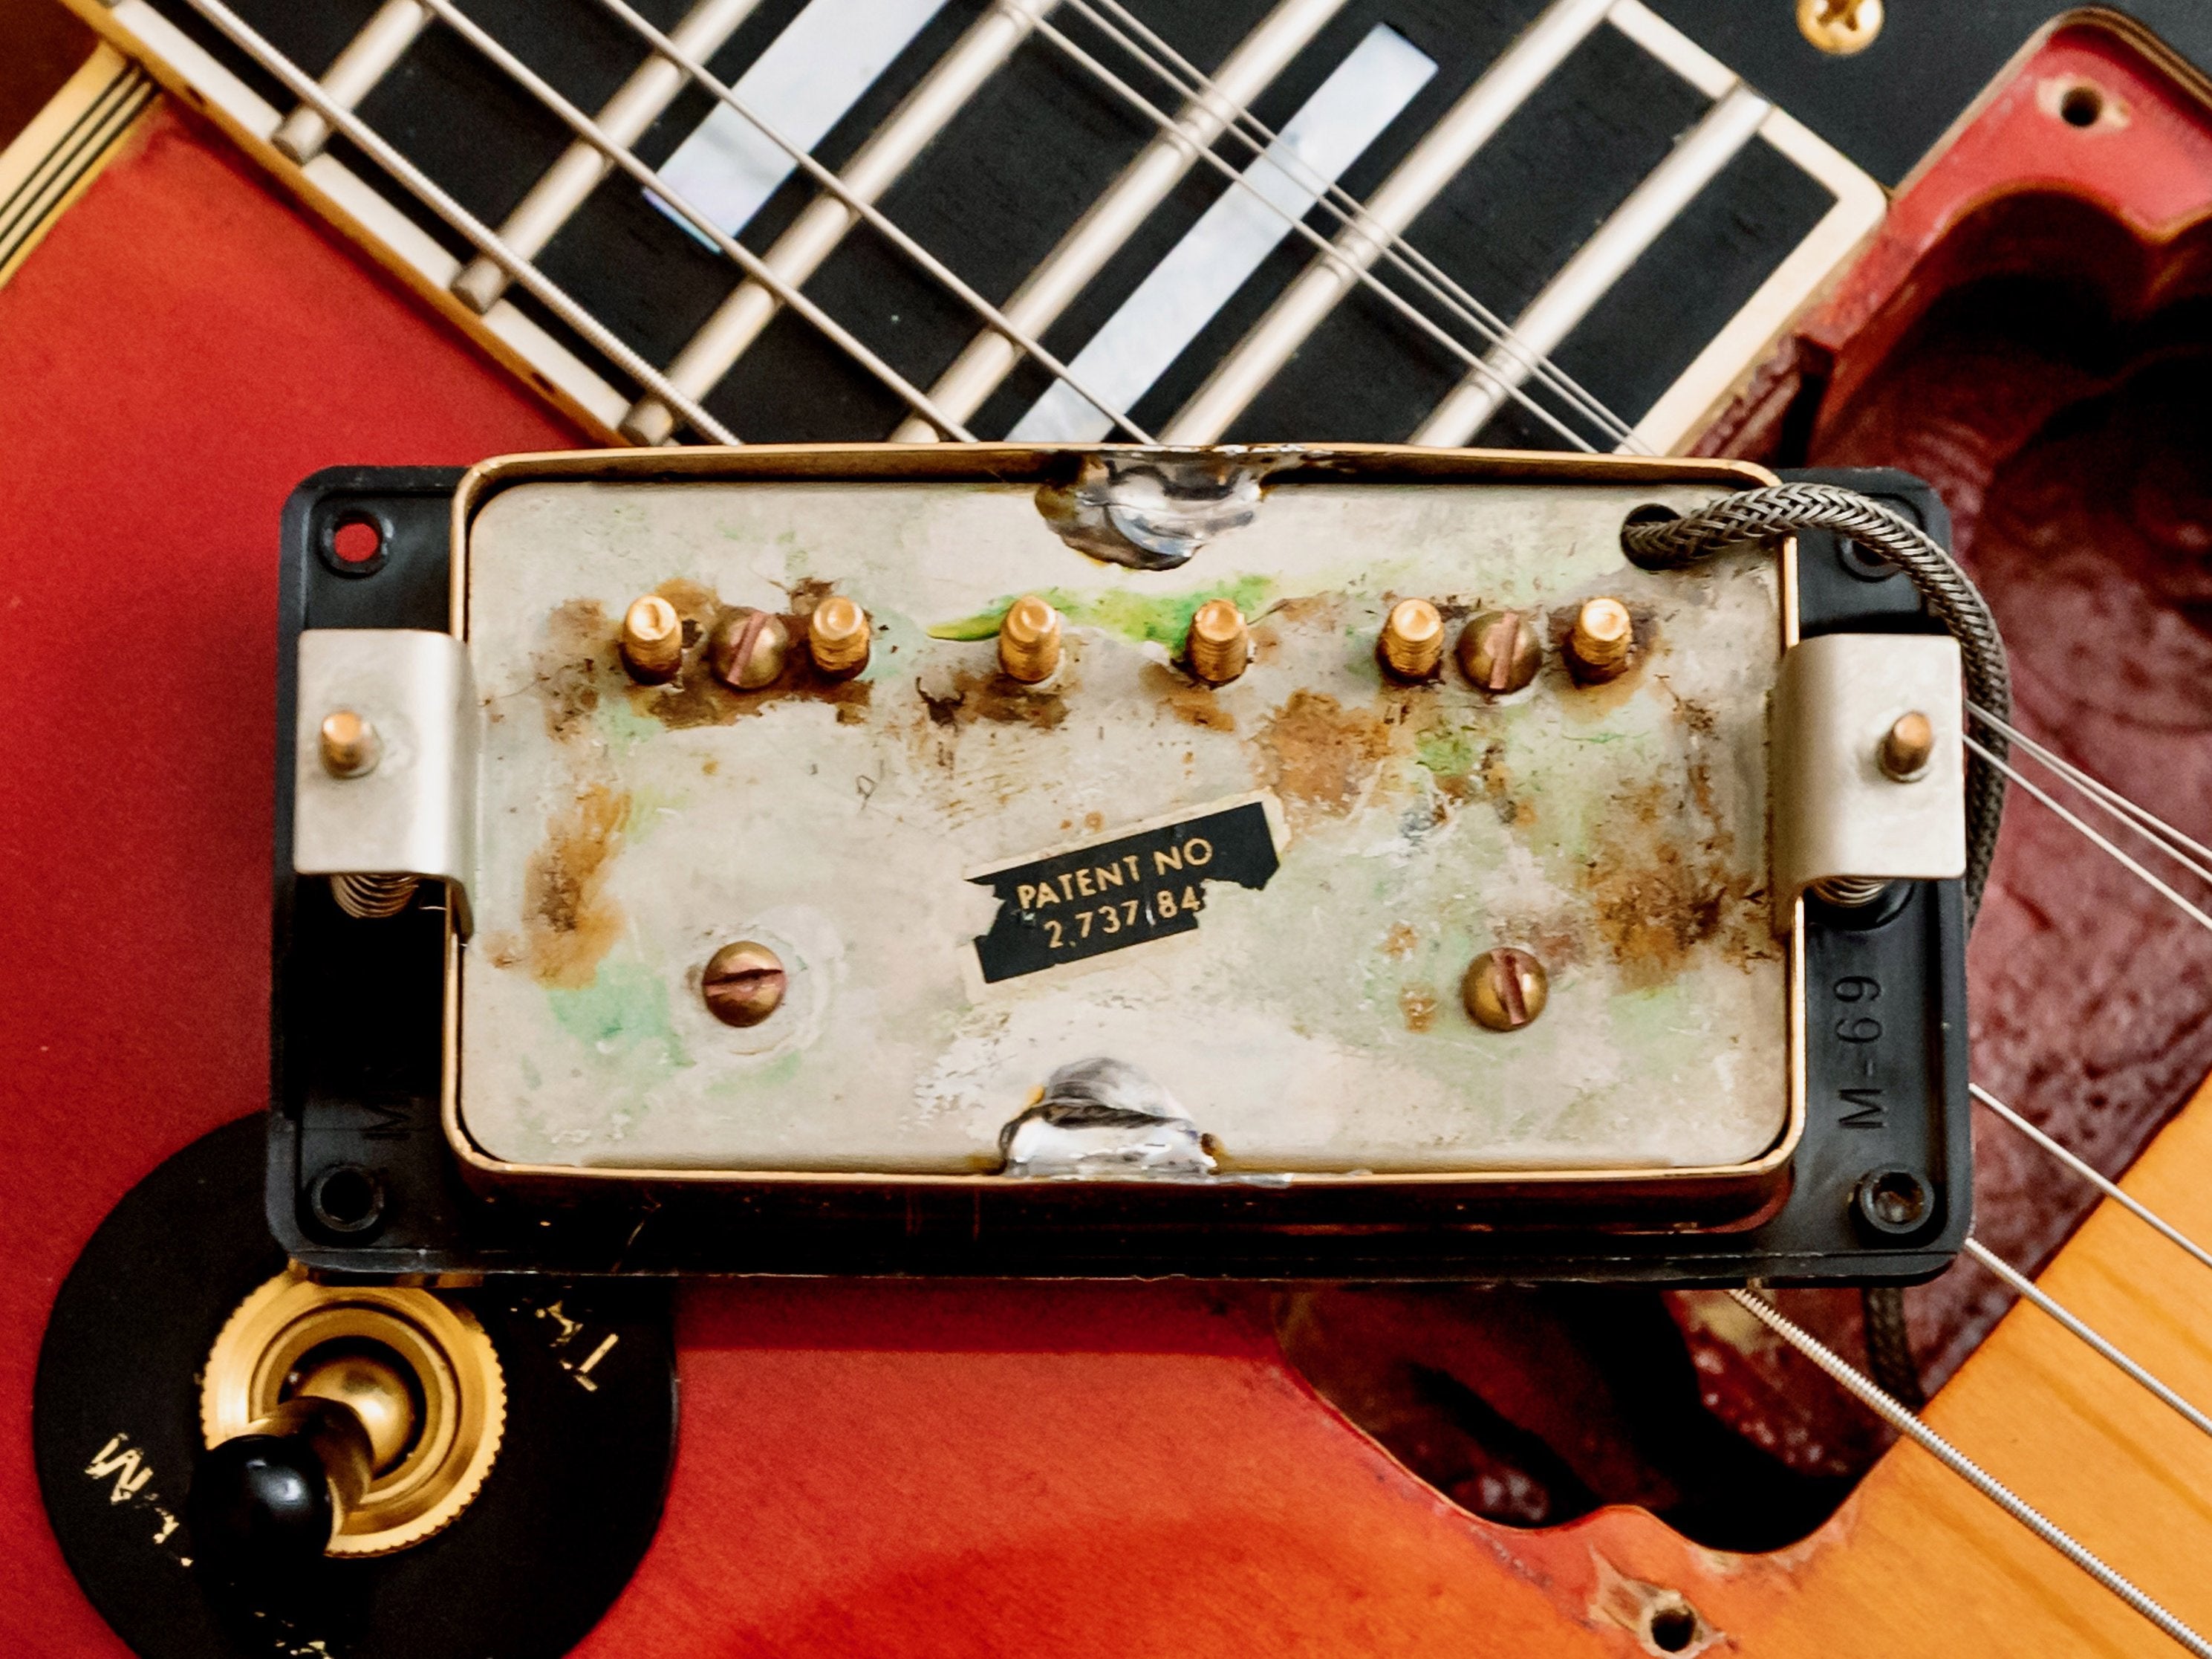 1971 Gibson Les Paul Custom Vintage Electric Guitar Cherry Sunburst w/ T Tops, Embossed Covers, Case